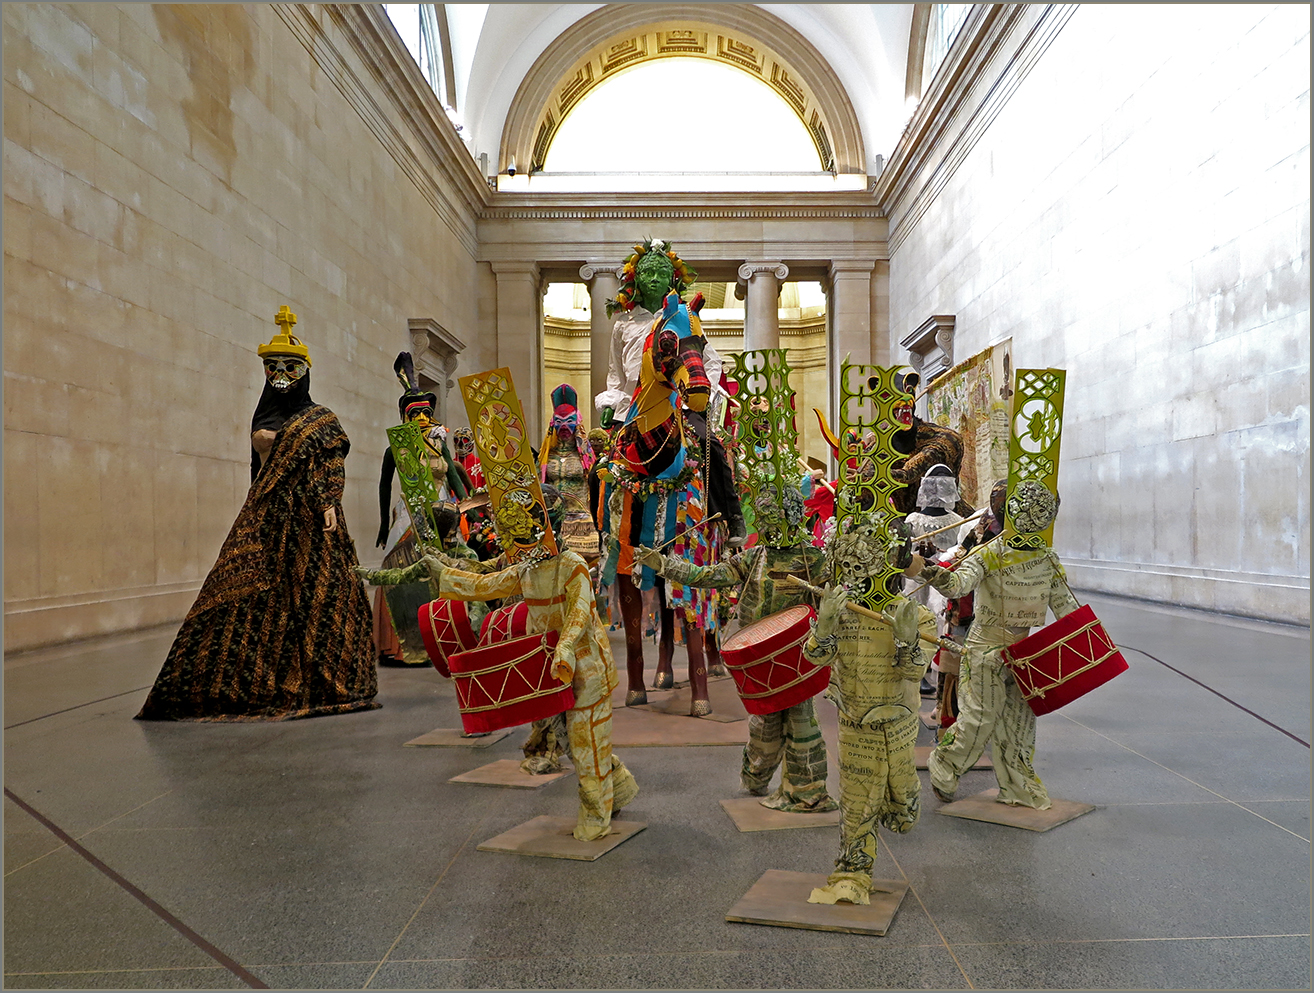 "The Procession" (1) - Tate Britain - London